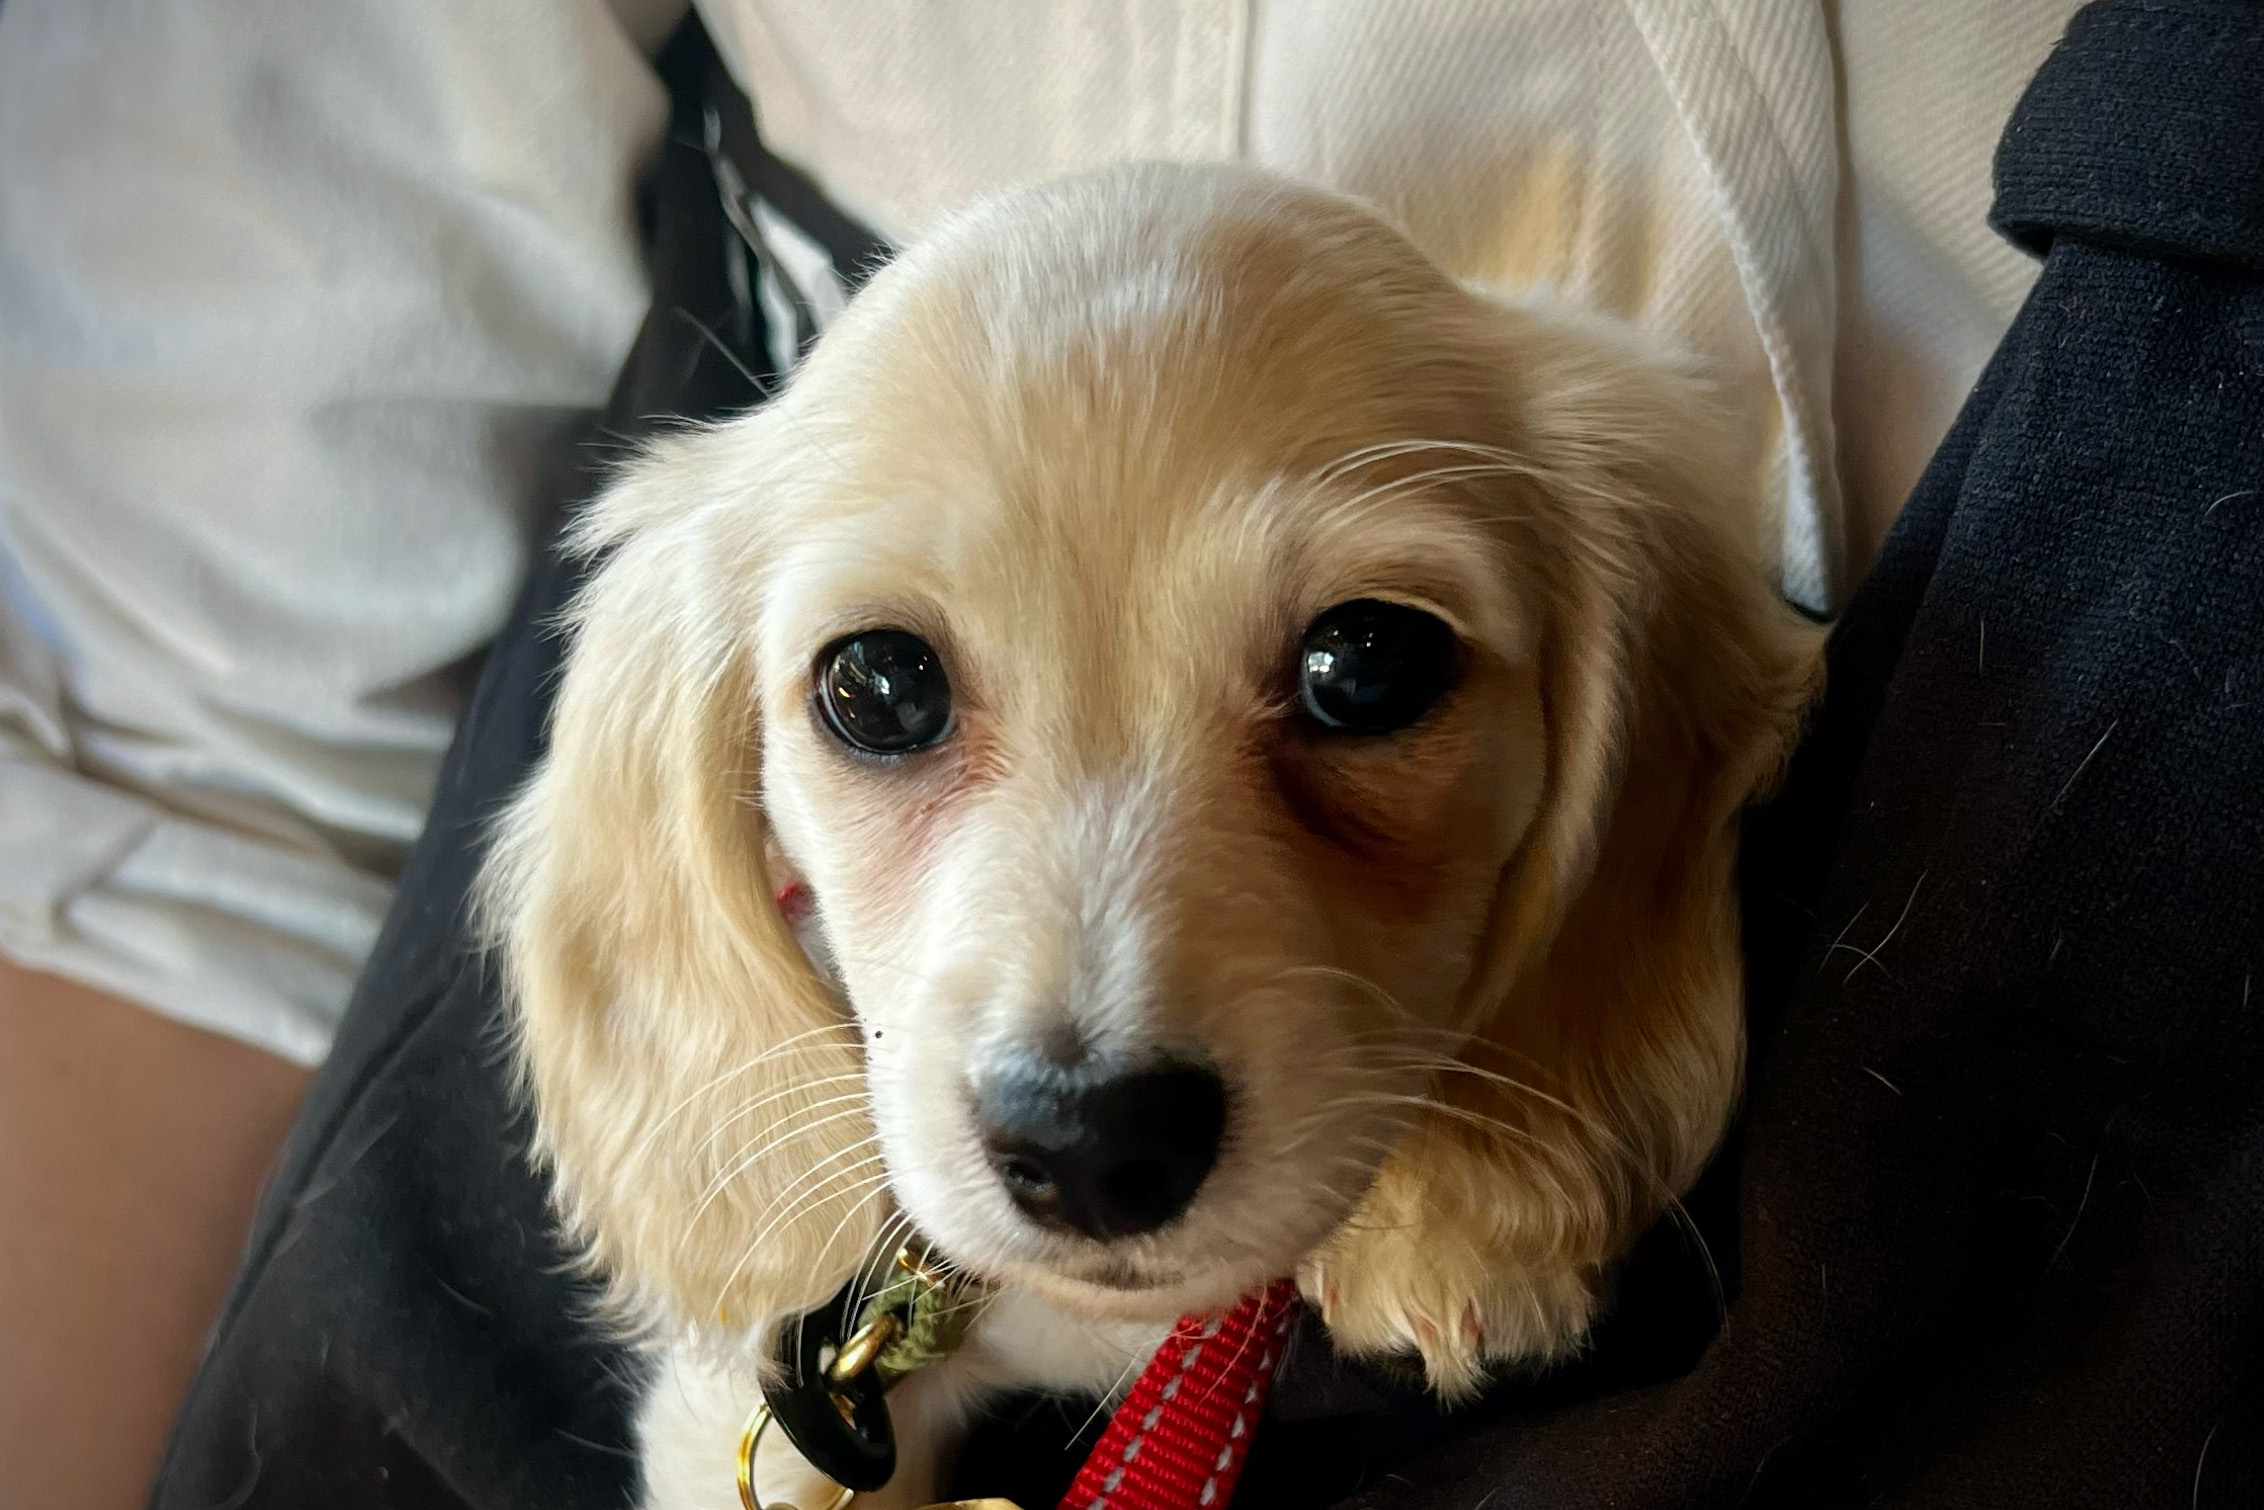 Olive, a nine-week-old puppy